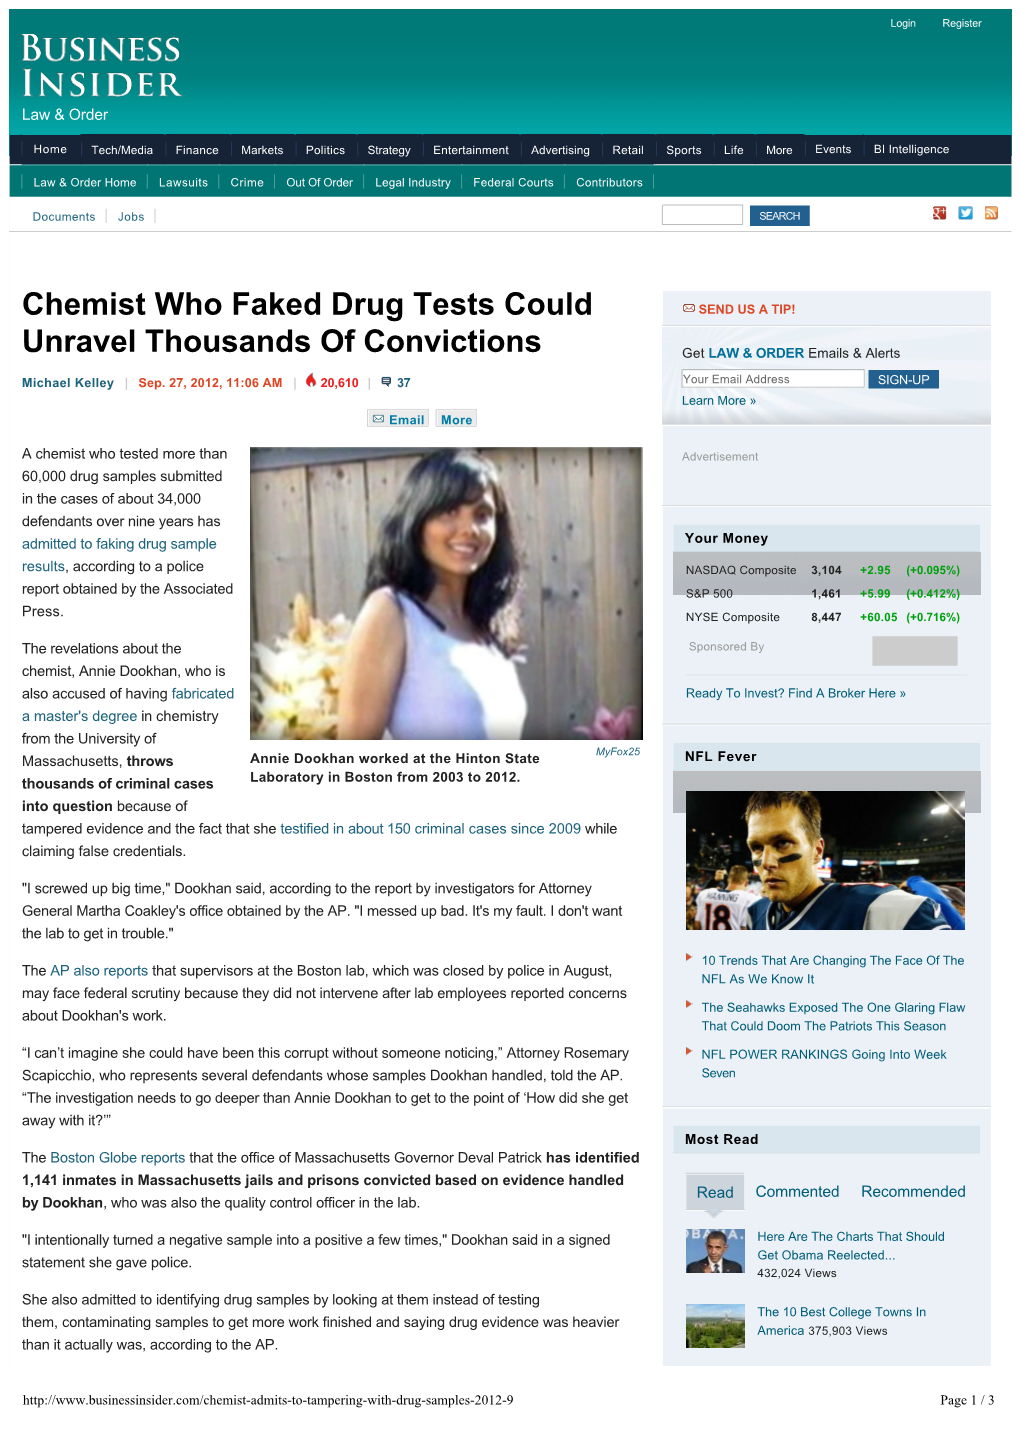 Chemist Admits Tampering with Drug Samples